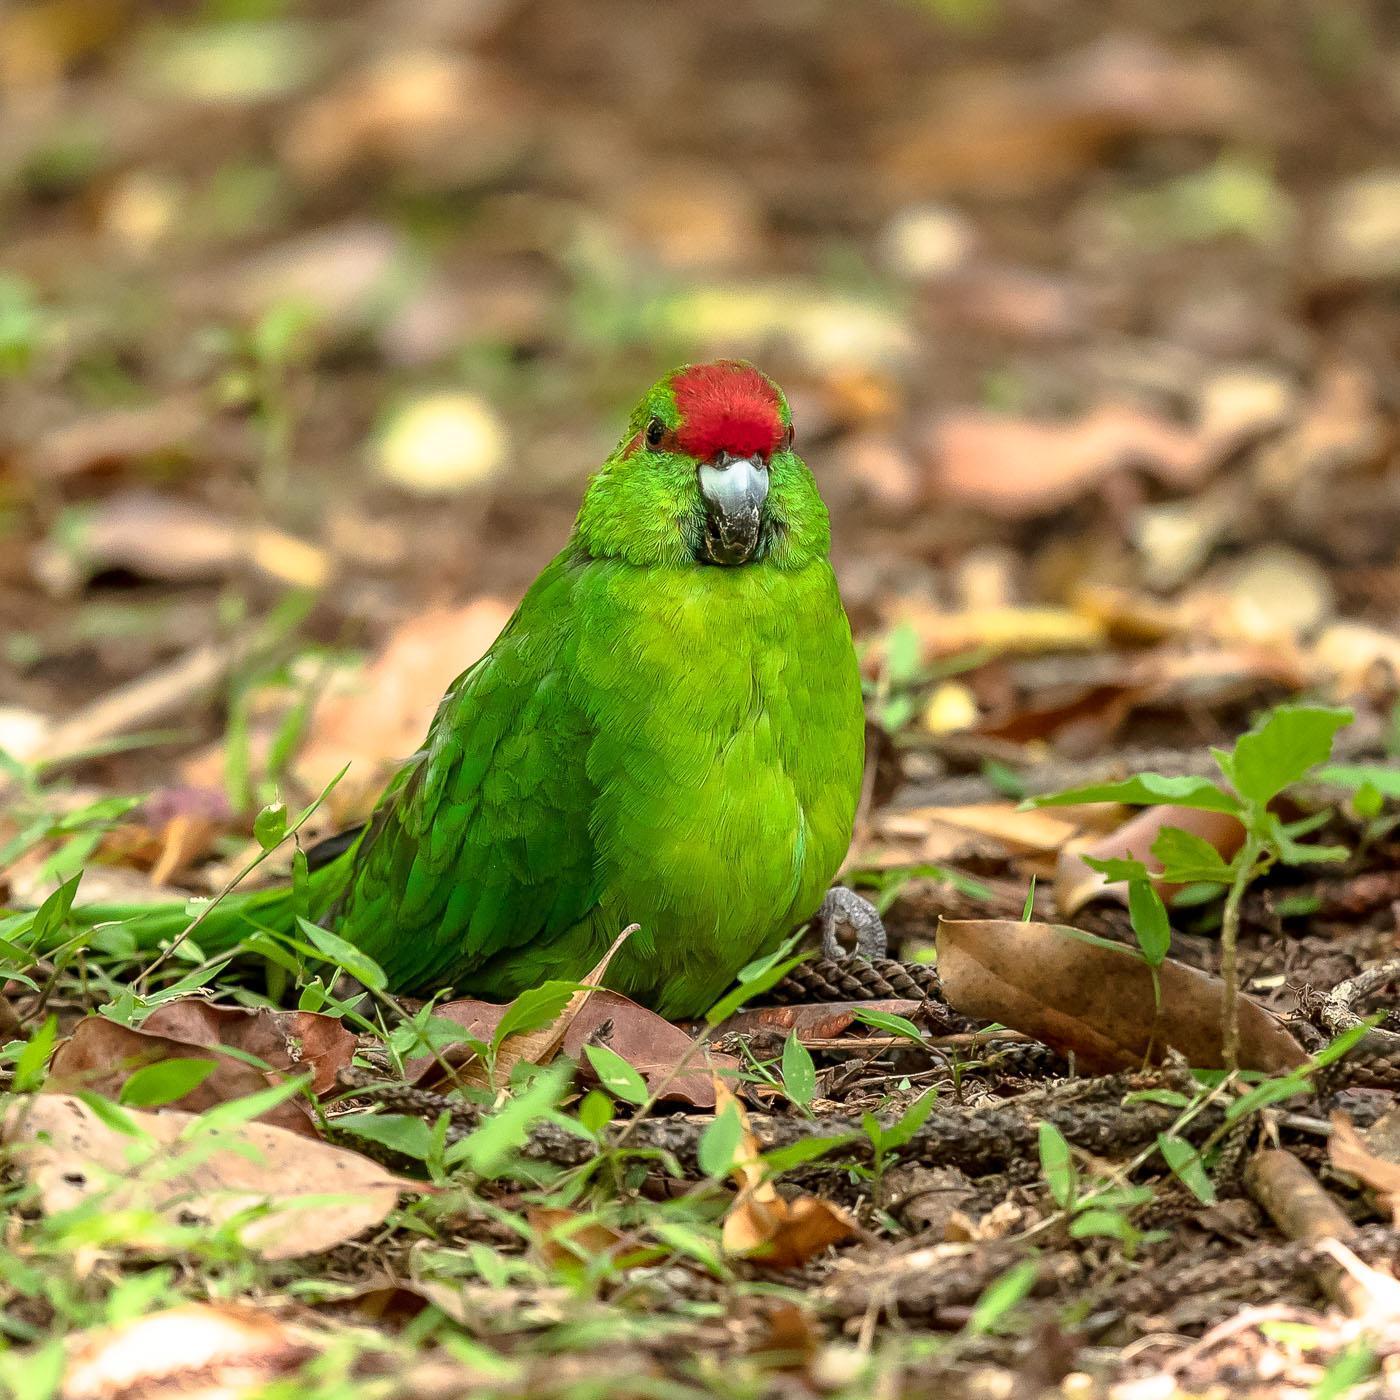 Norfolk Island Parakeet Photo by Roger Williams